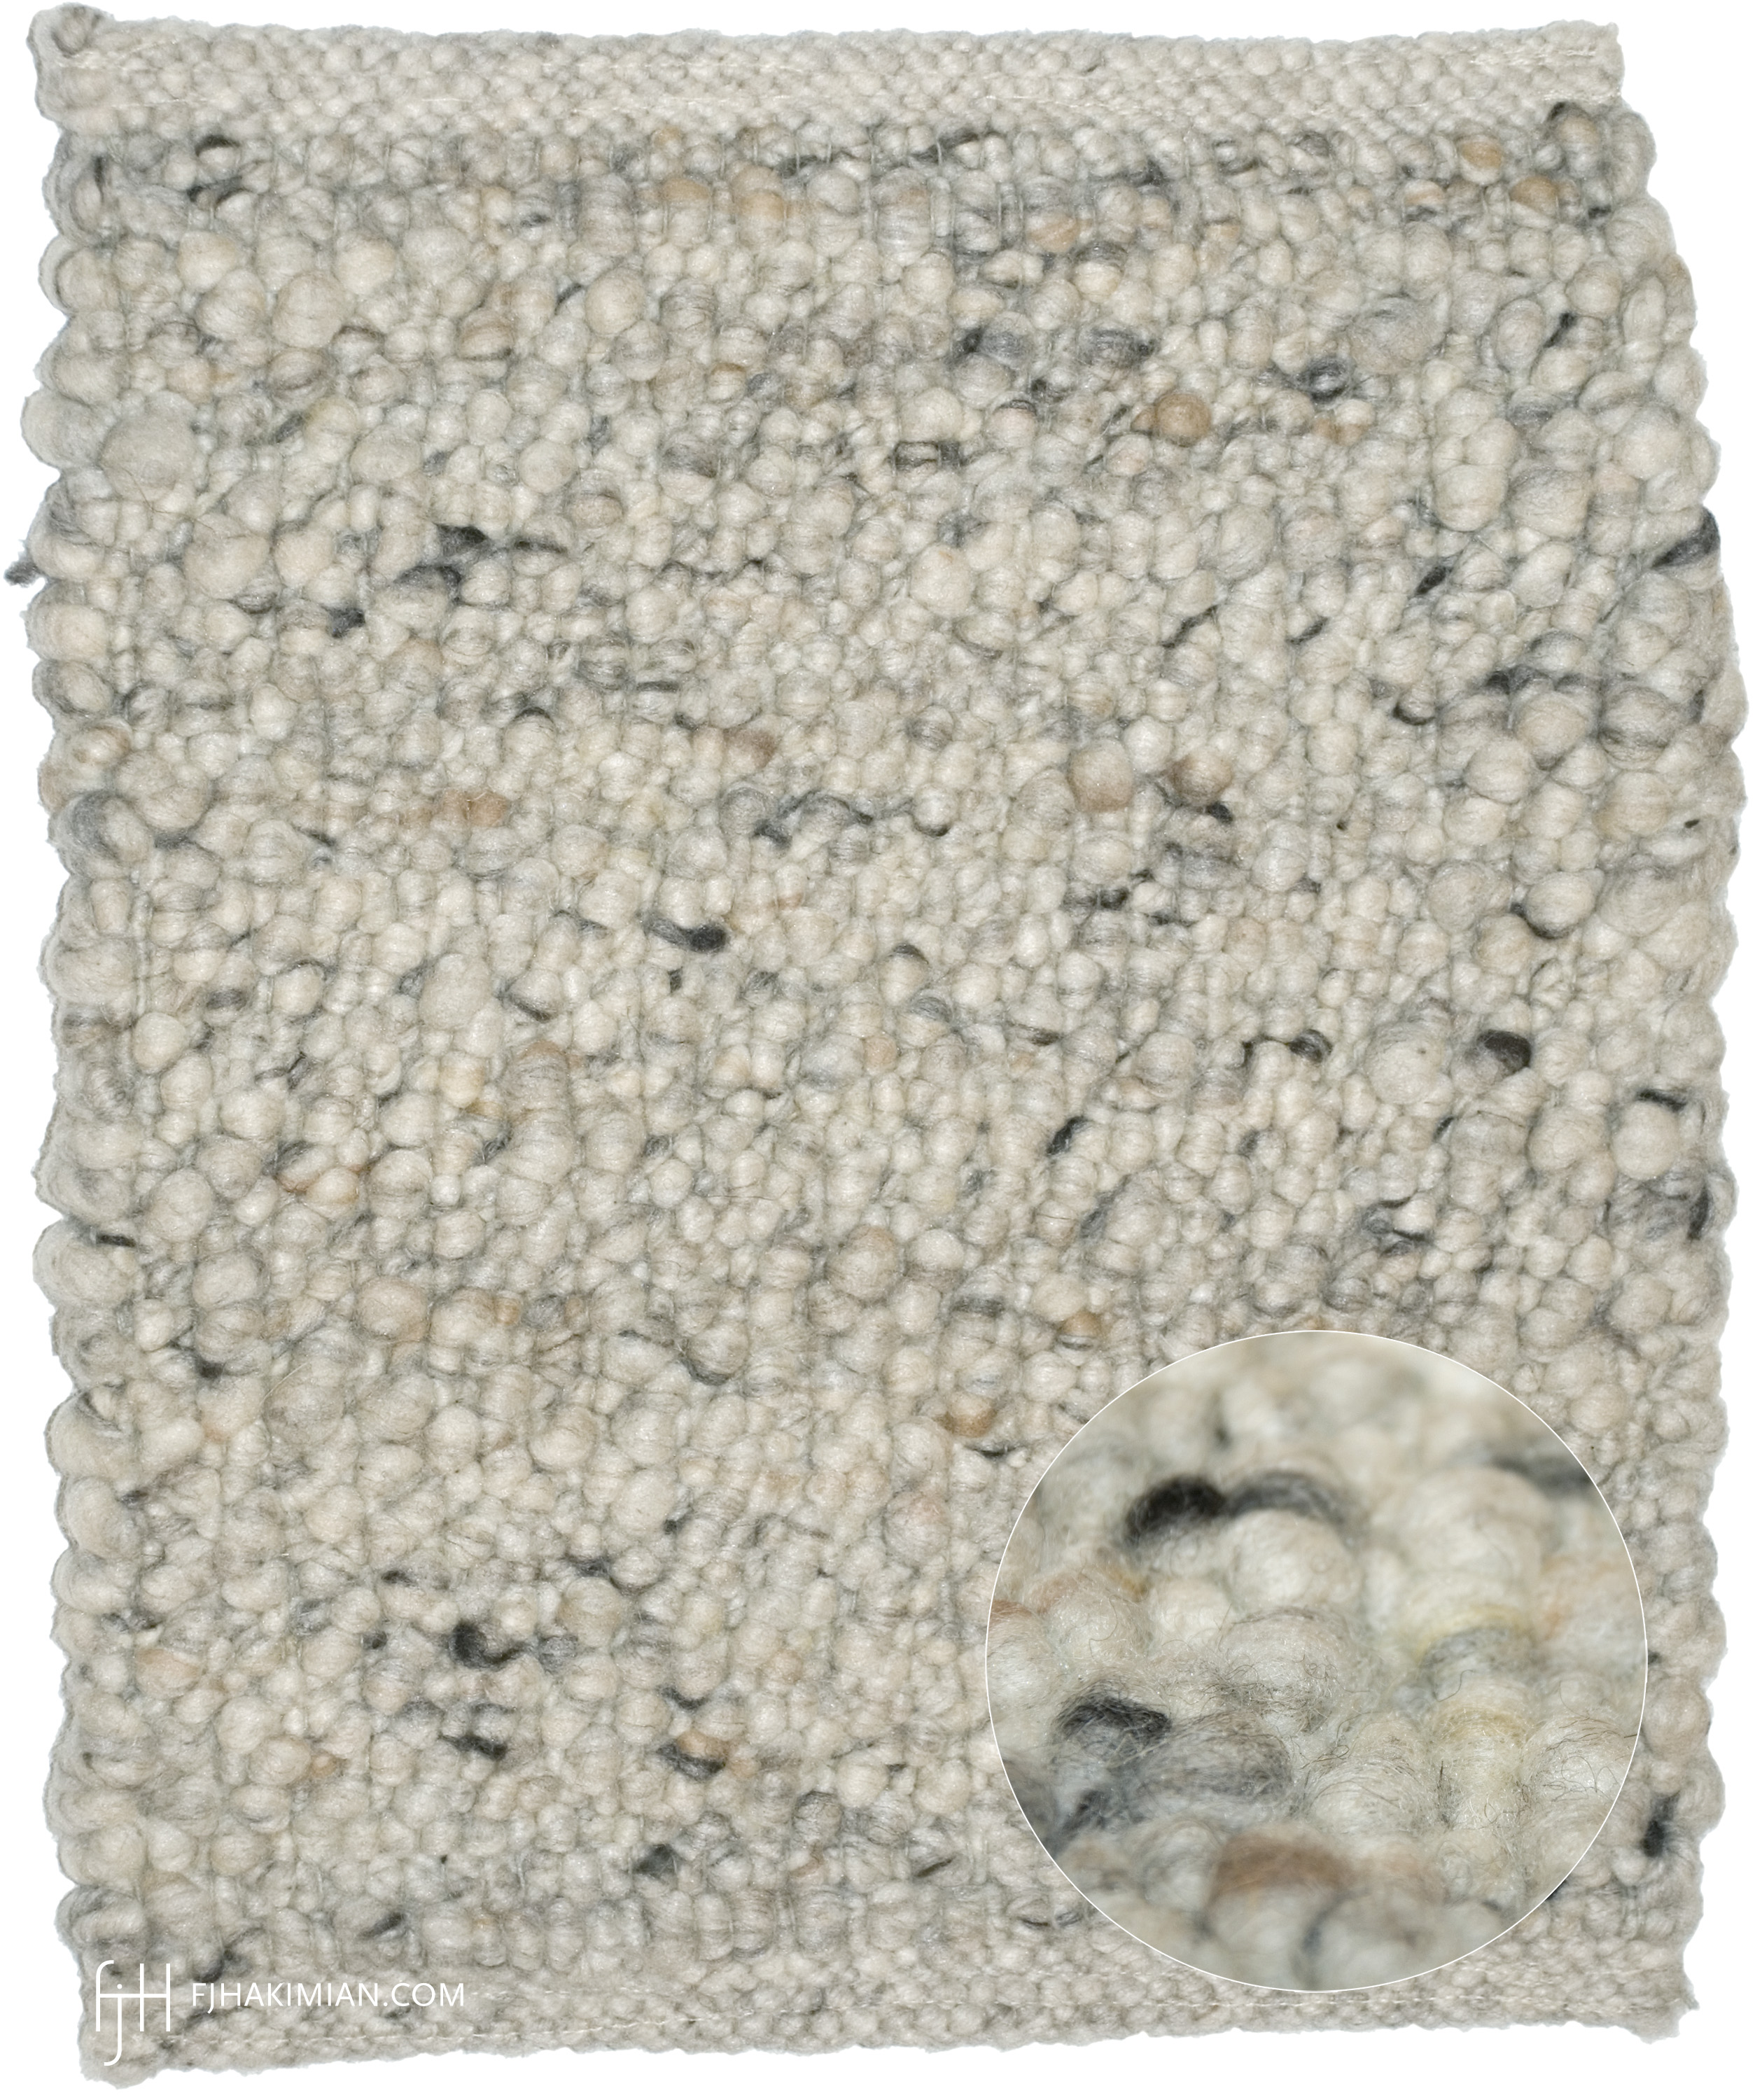 HH-Super Karoo| Custom African Wool Carpet | FJ Hakimian | Carpet Gallery in NYC